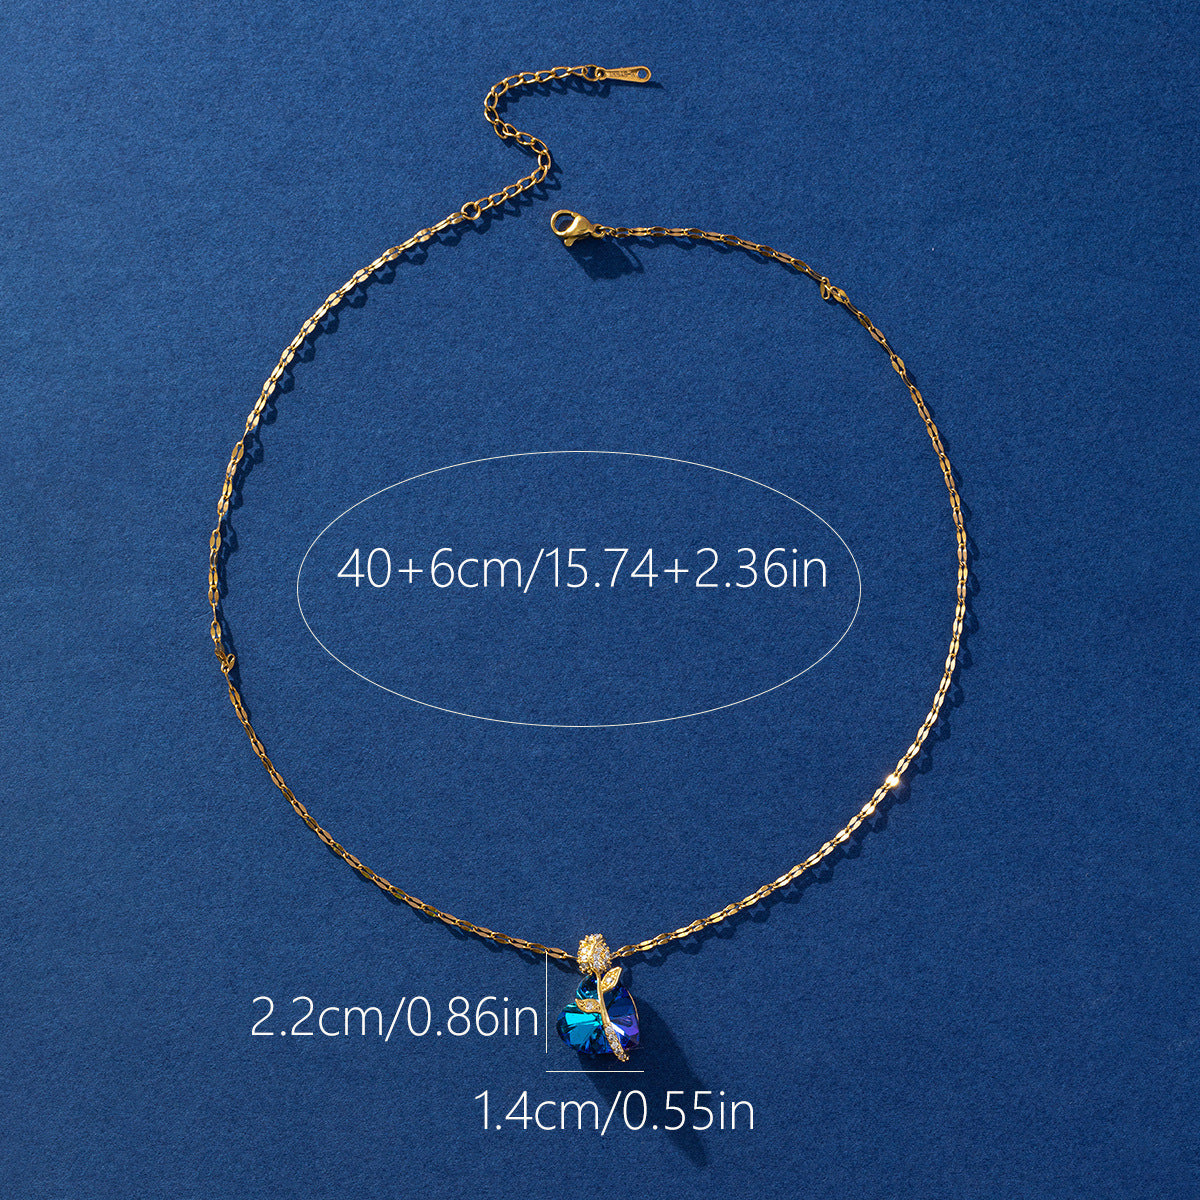 Women's Fashion Sapphire Heart Pendant Necklace - Elegant Jewelry Gift